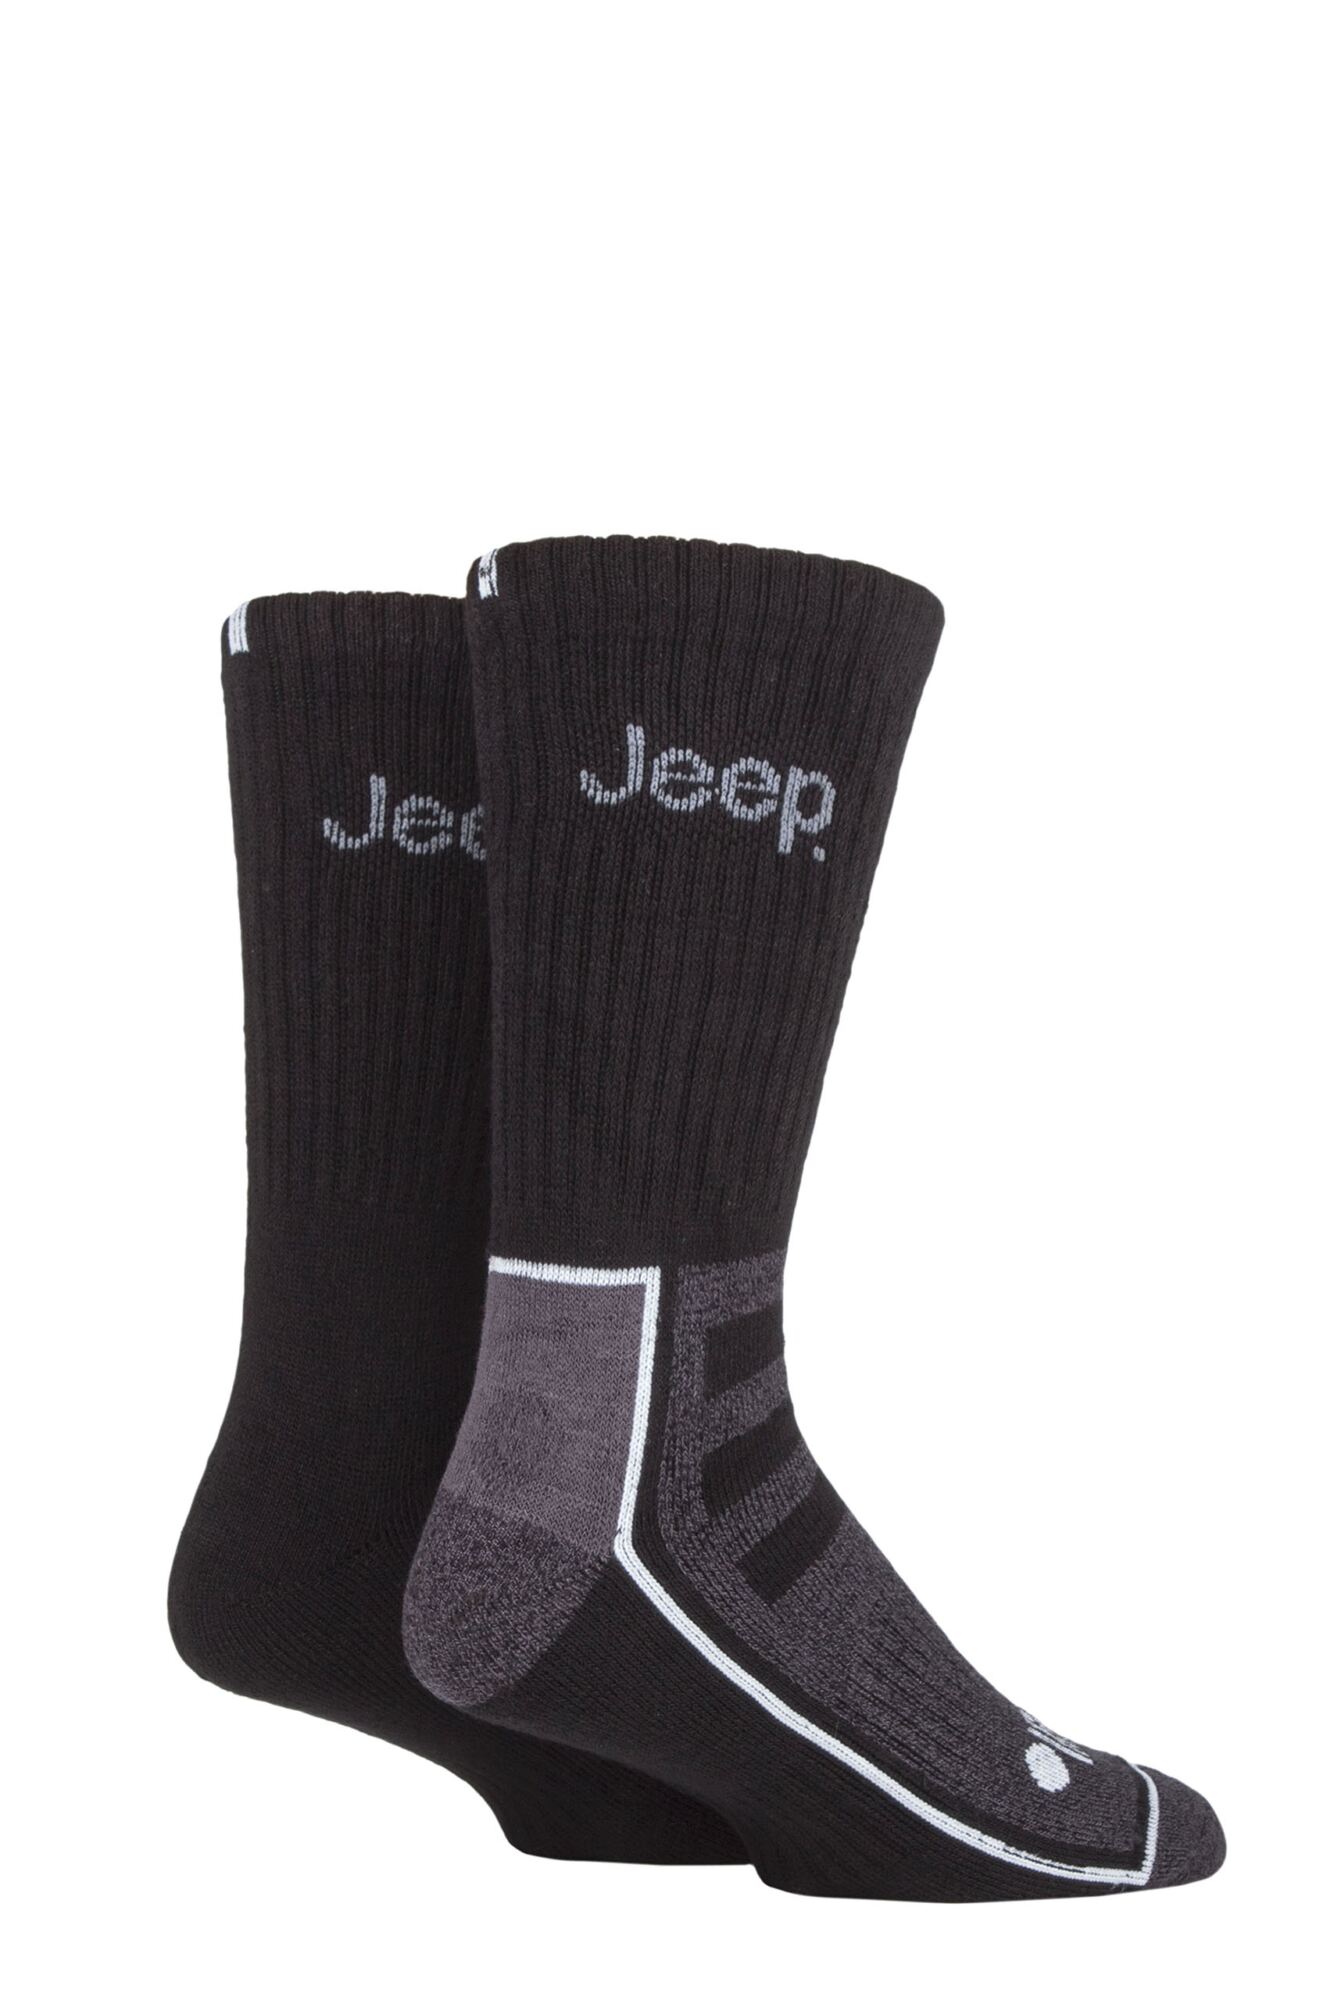 Mens 2 Pair Jeep Exclusive to SOCKSHOP Bamboo Boot Socks